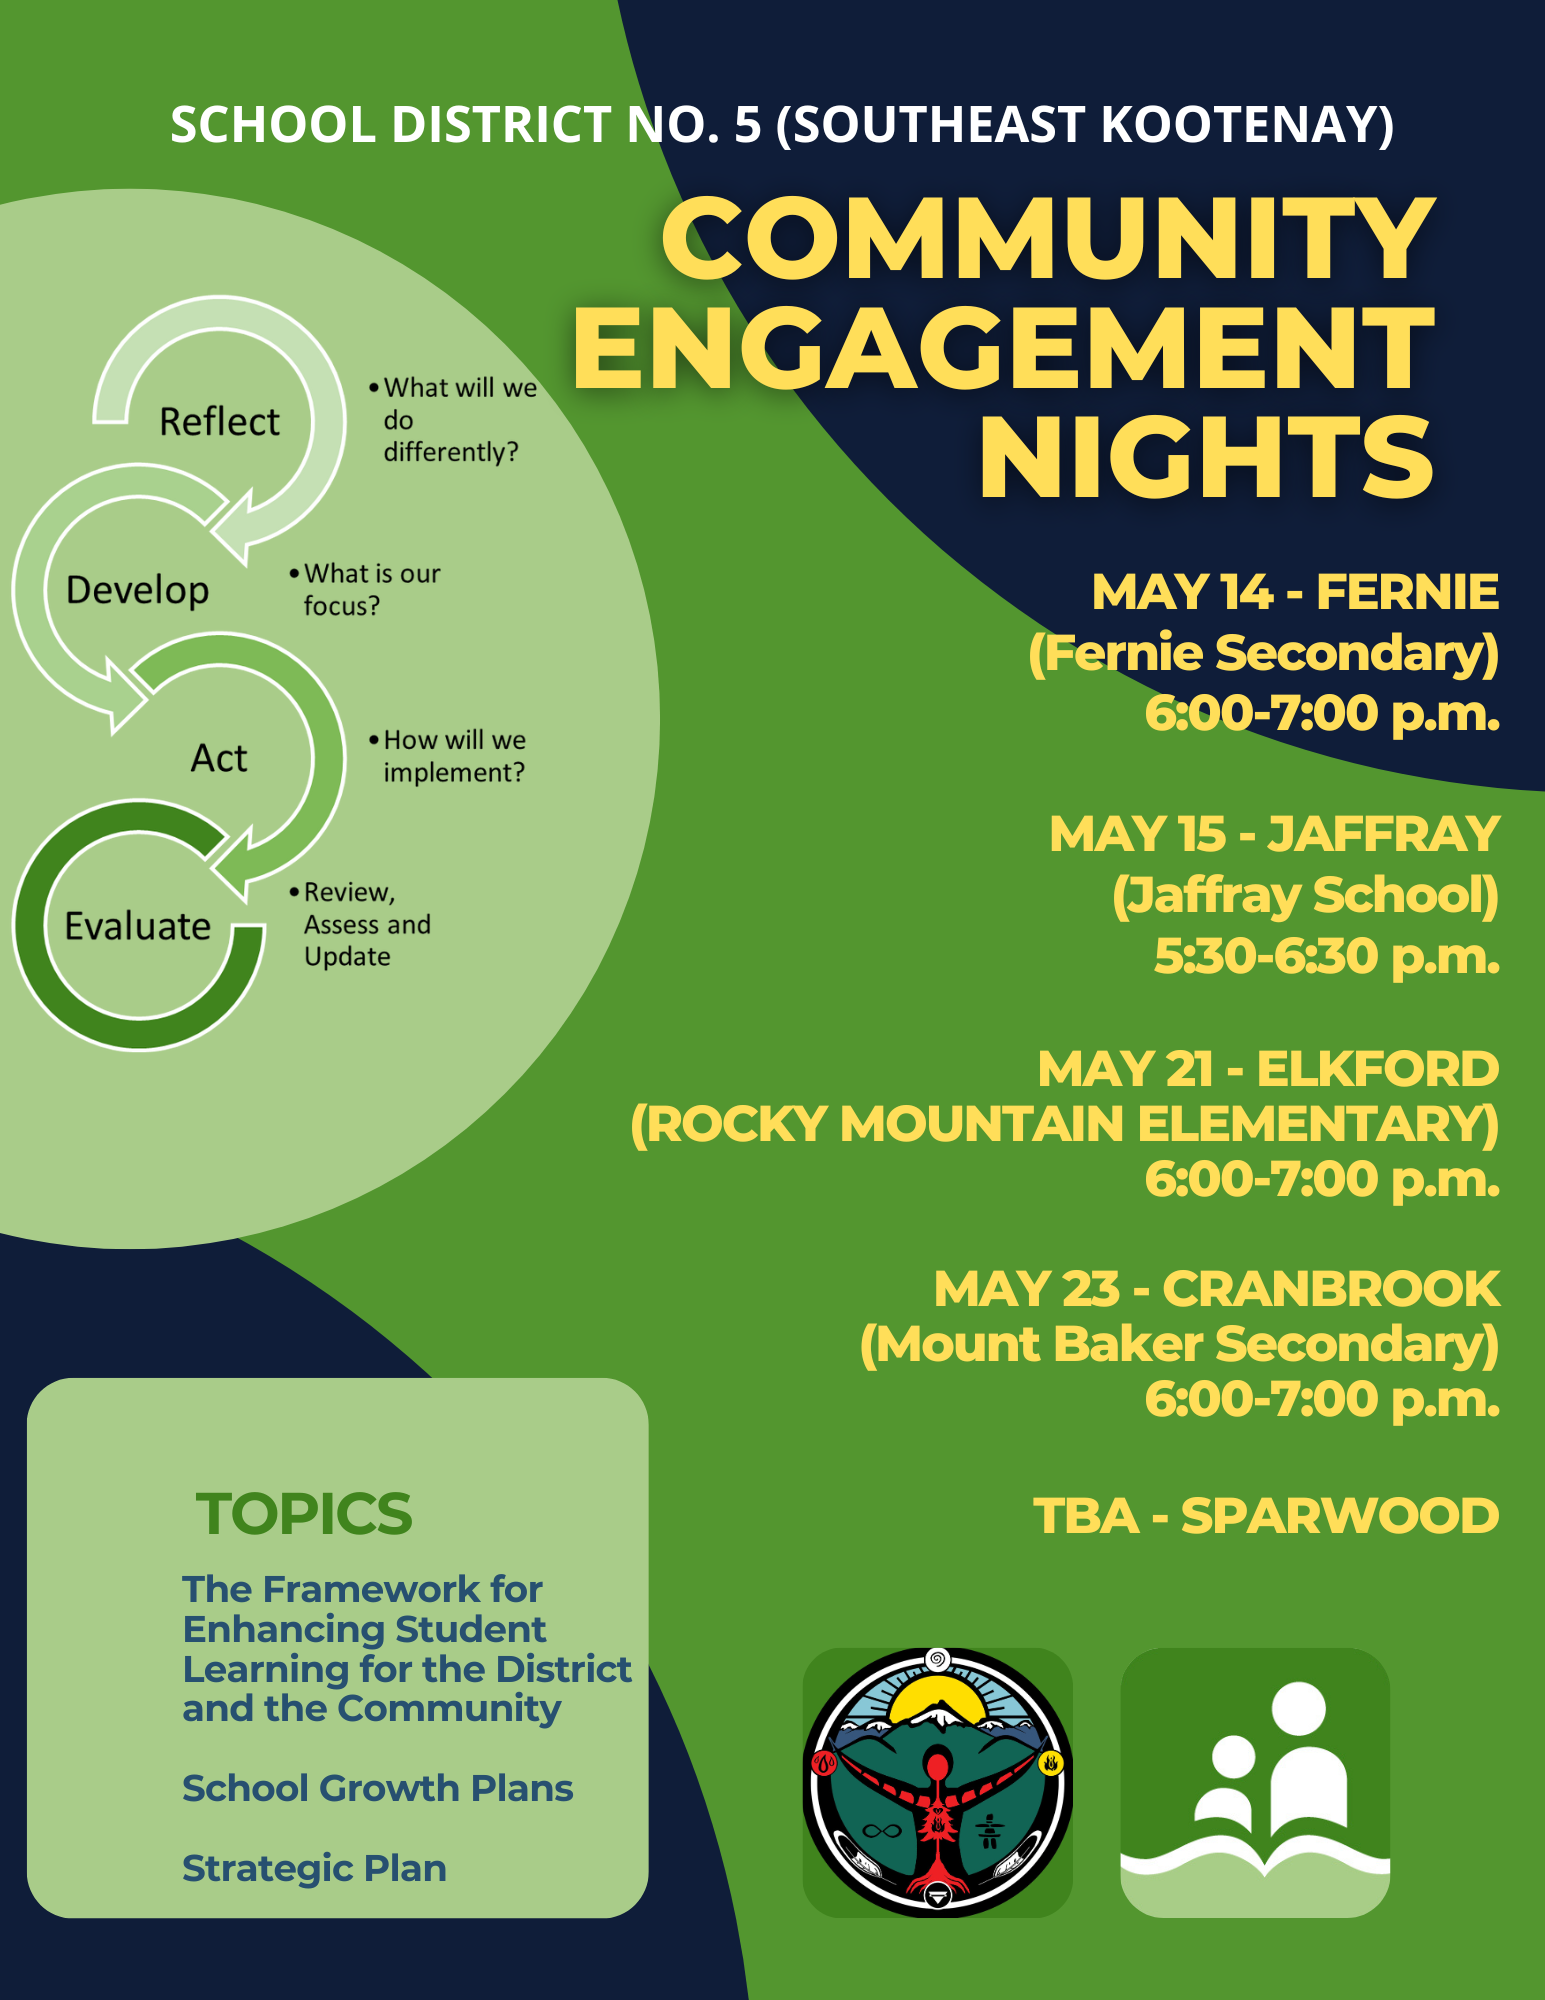 Upcoming Community Engagement Nights